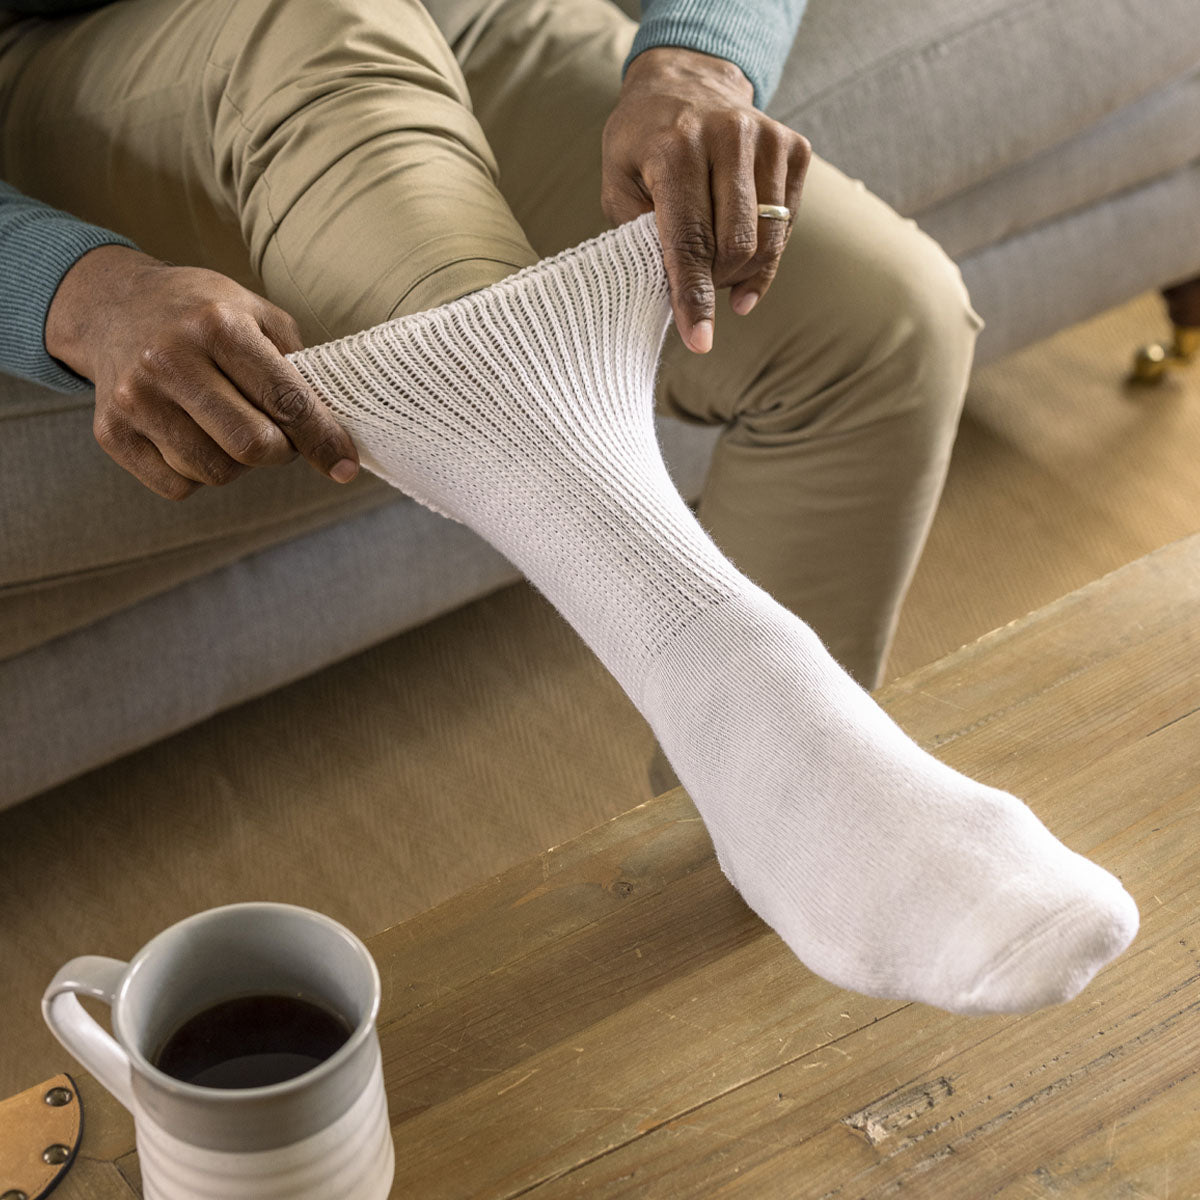 3 Pairs IOMI FootNurse Cushion Foot Diabetic Socks - White